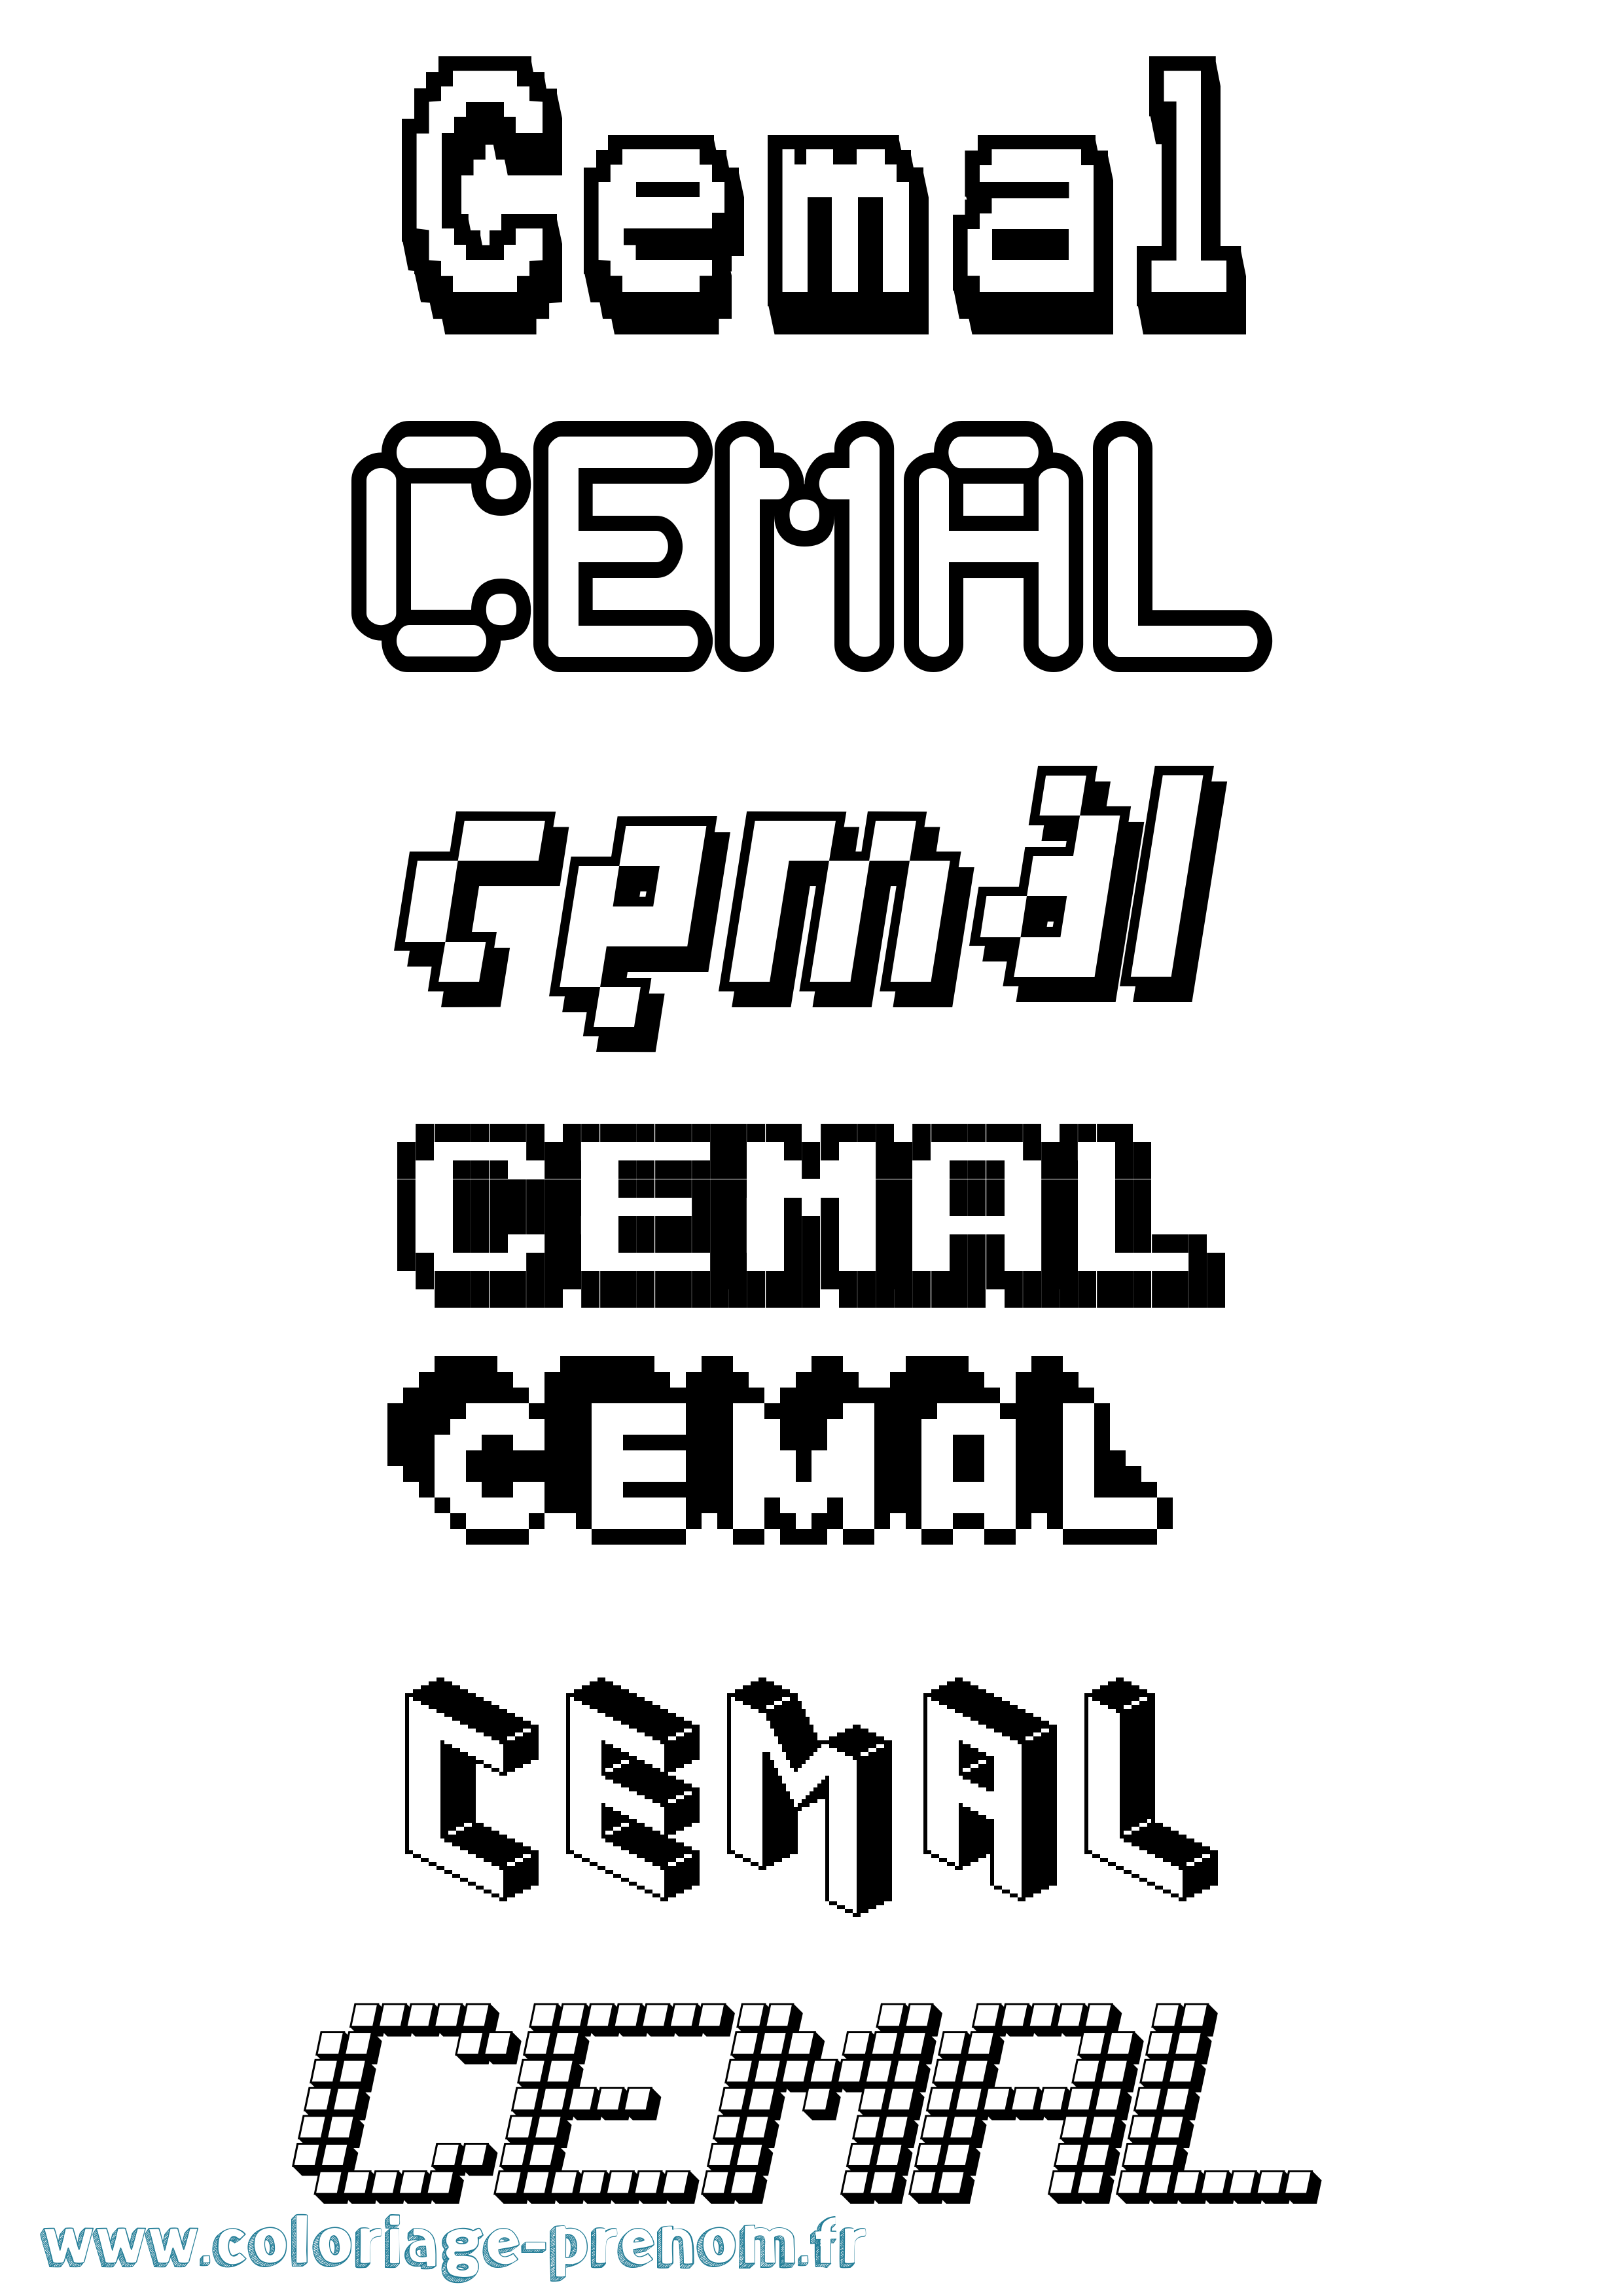 Coloriage prénom Cemal Pixel